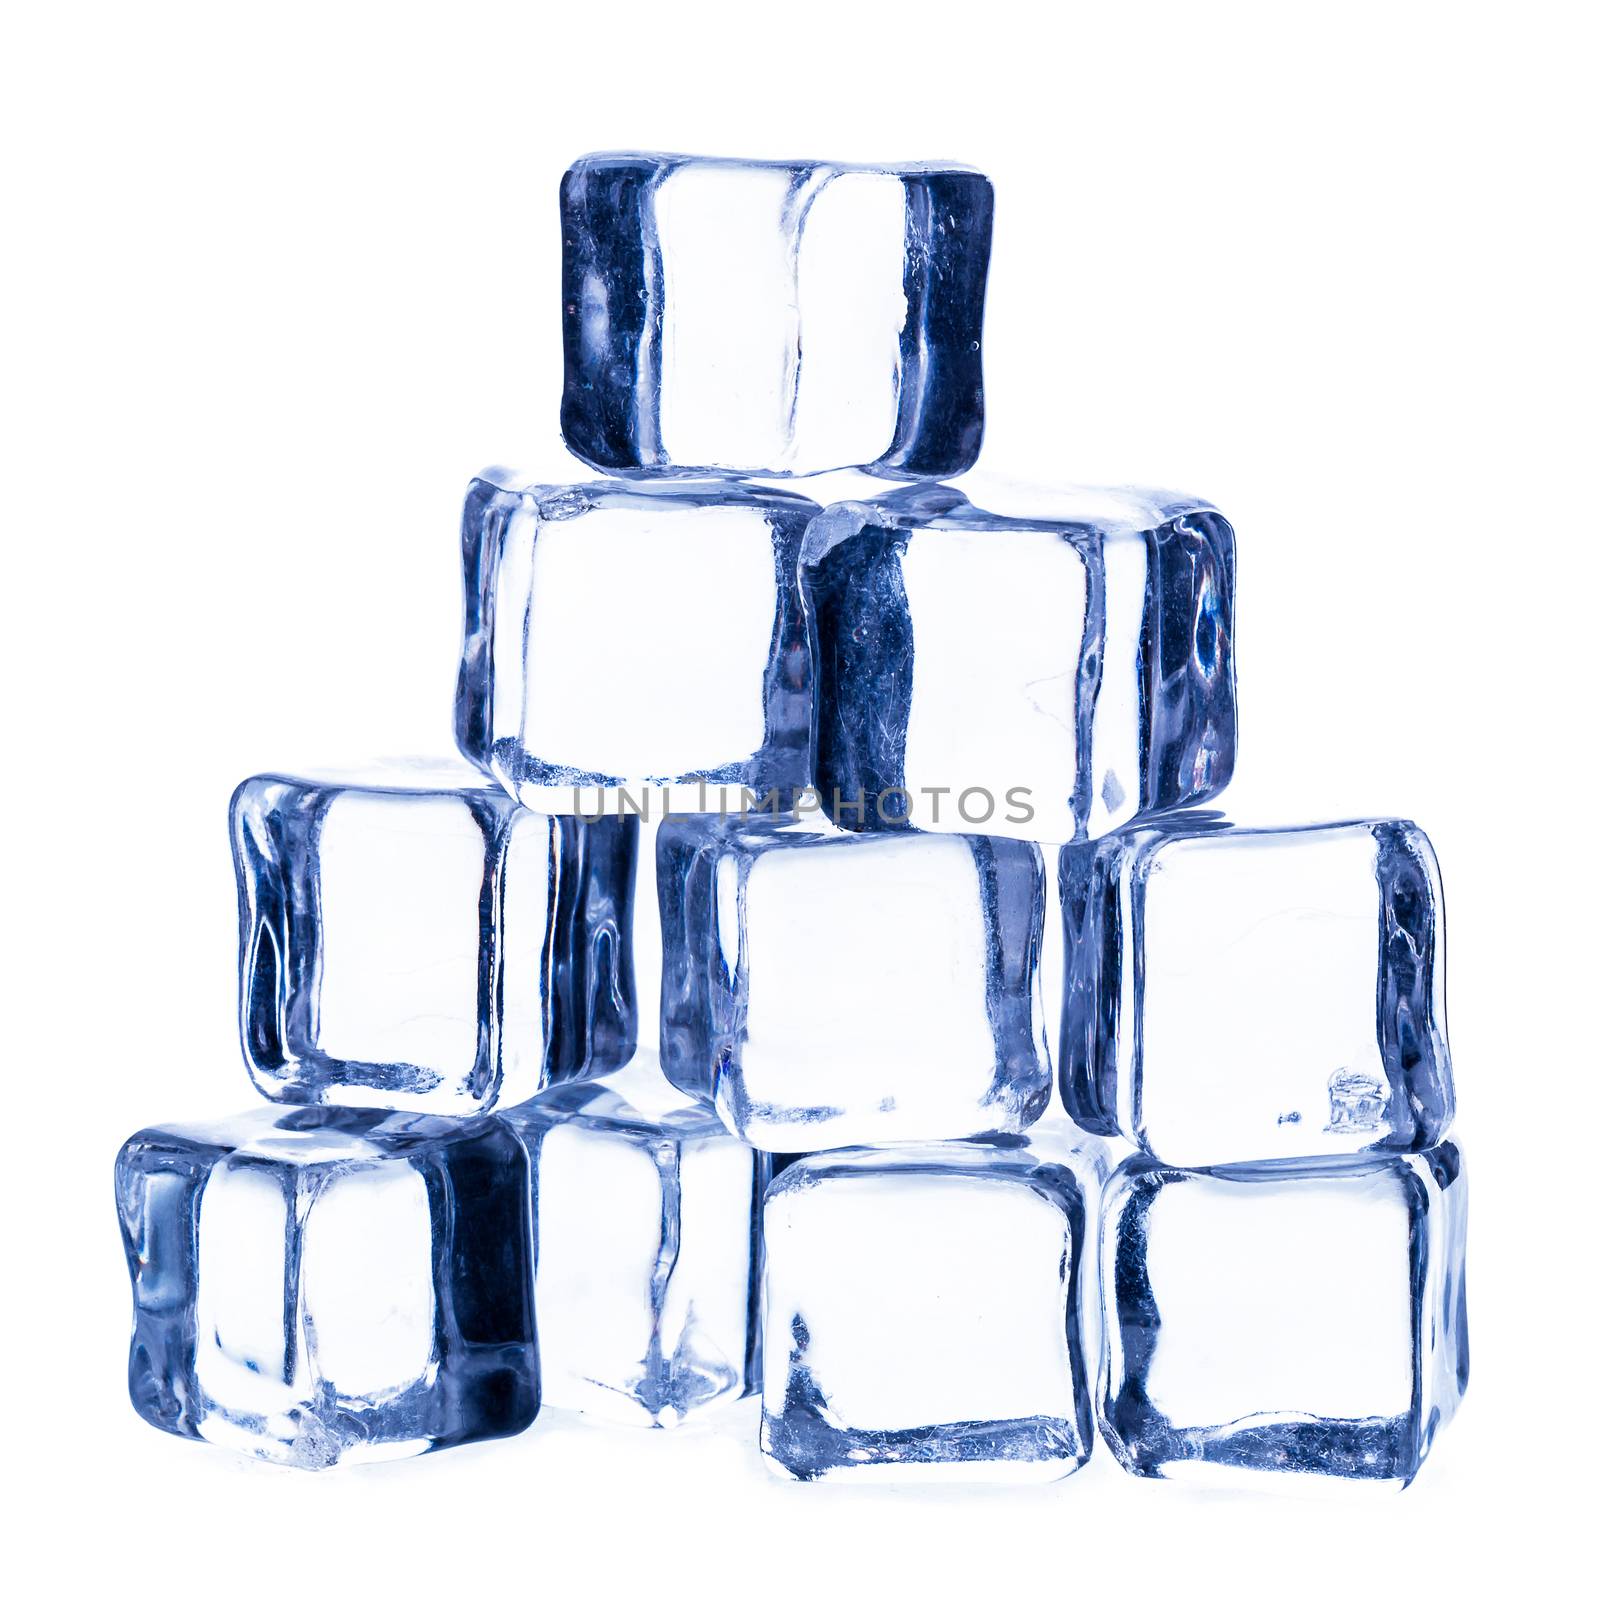 Melting ice cubes isolated on white background by kaiskynet